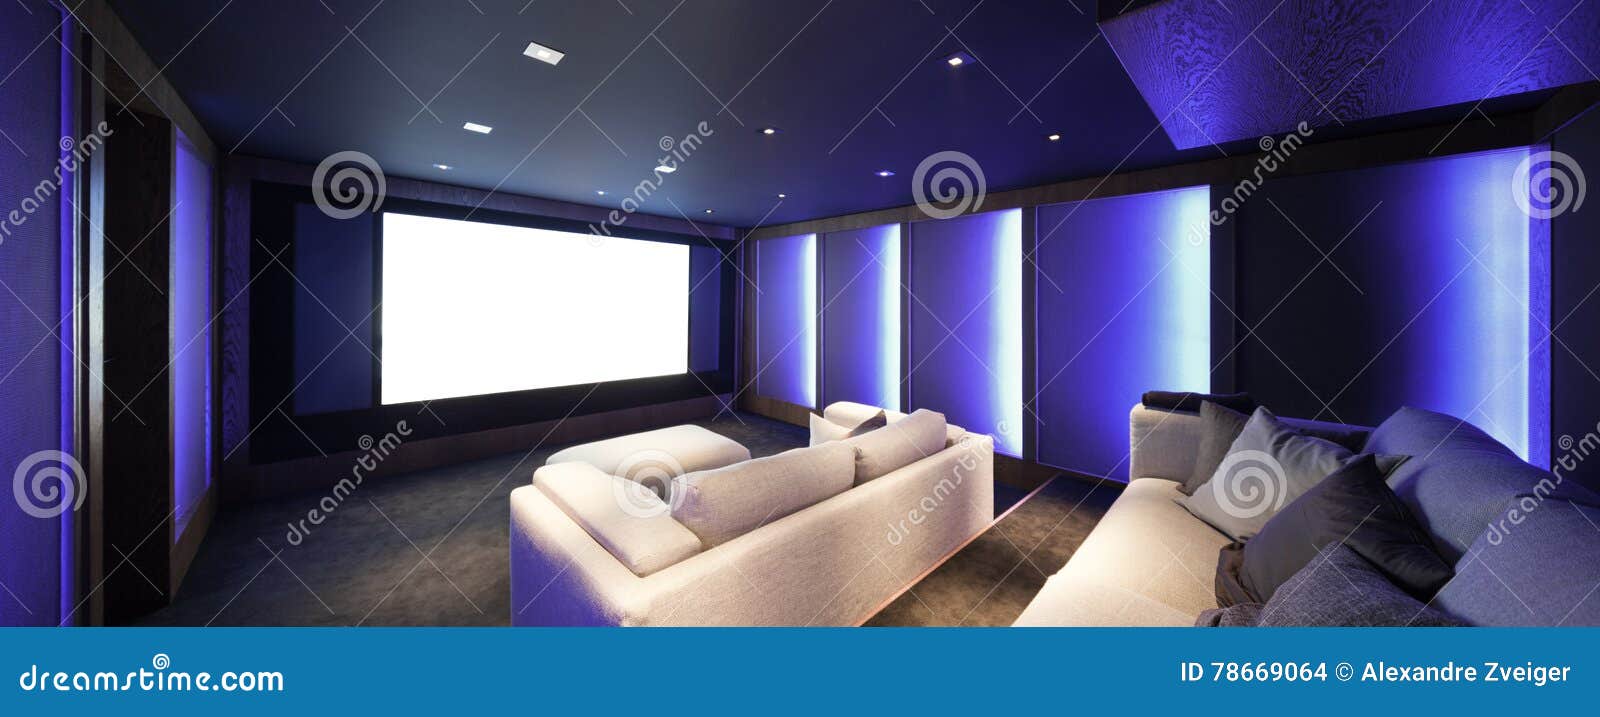 home theater, luxury interior